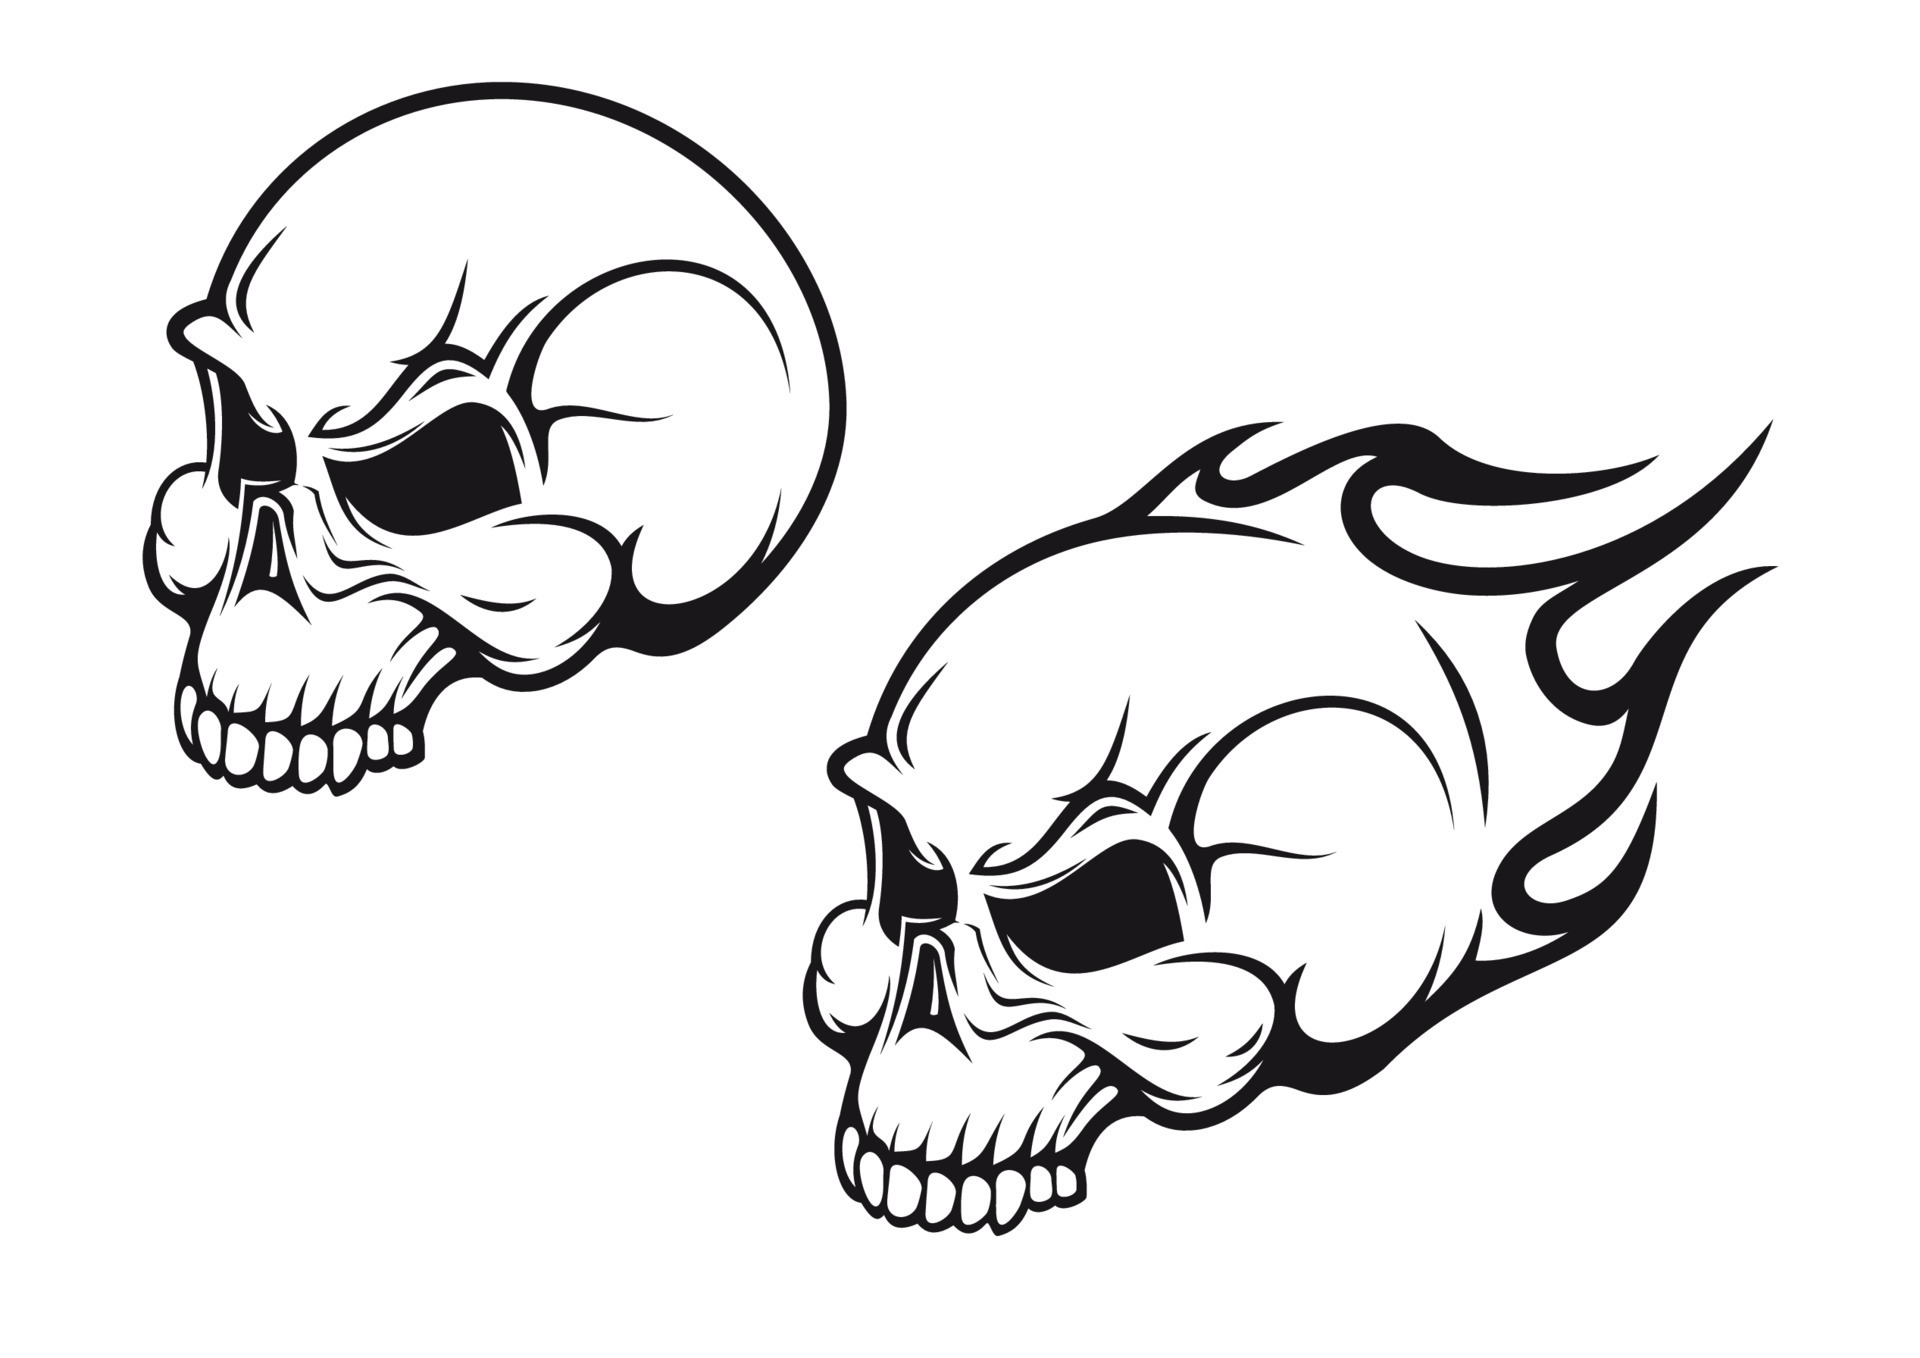 Easy to draw skull tattoo designs